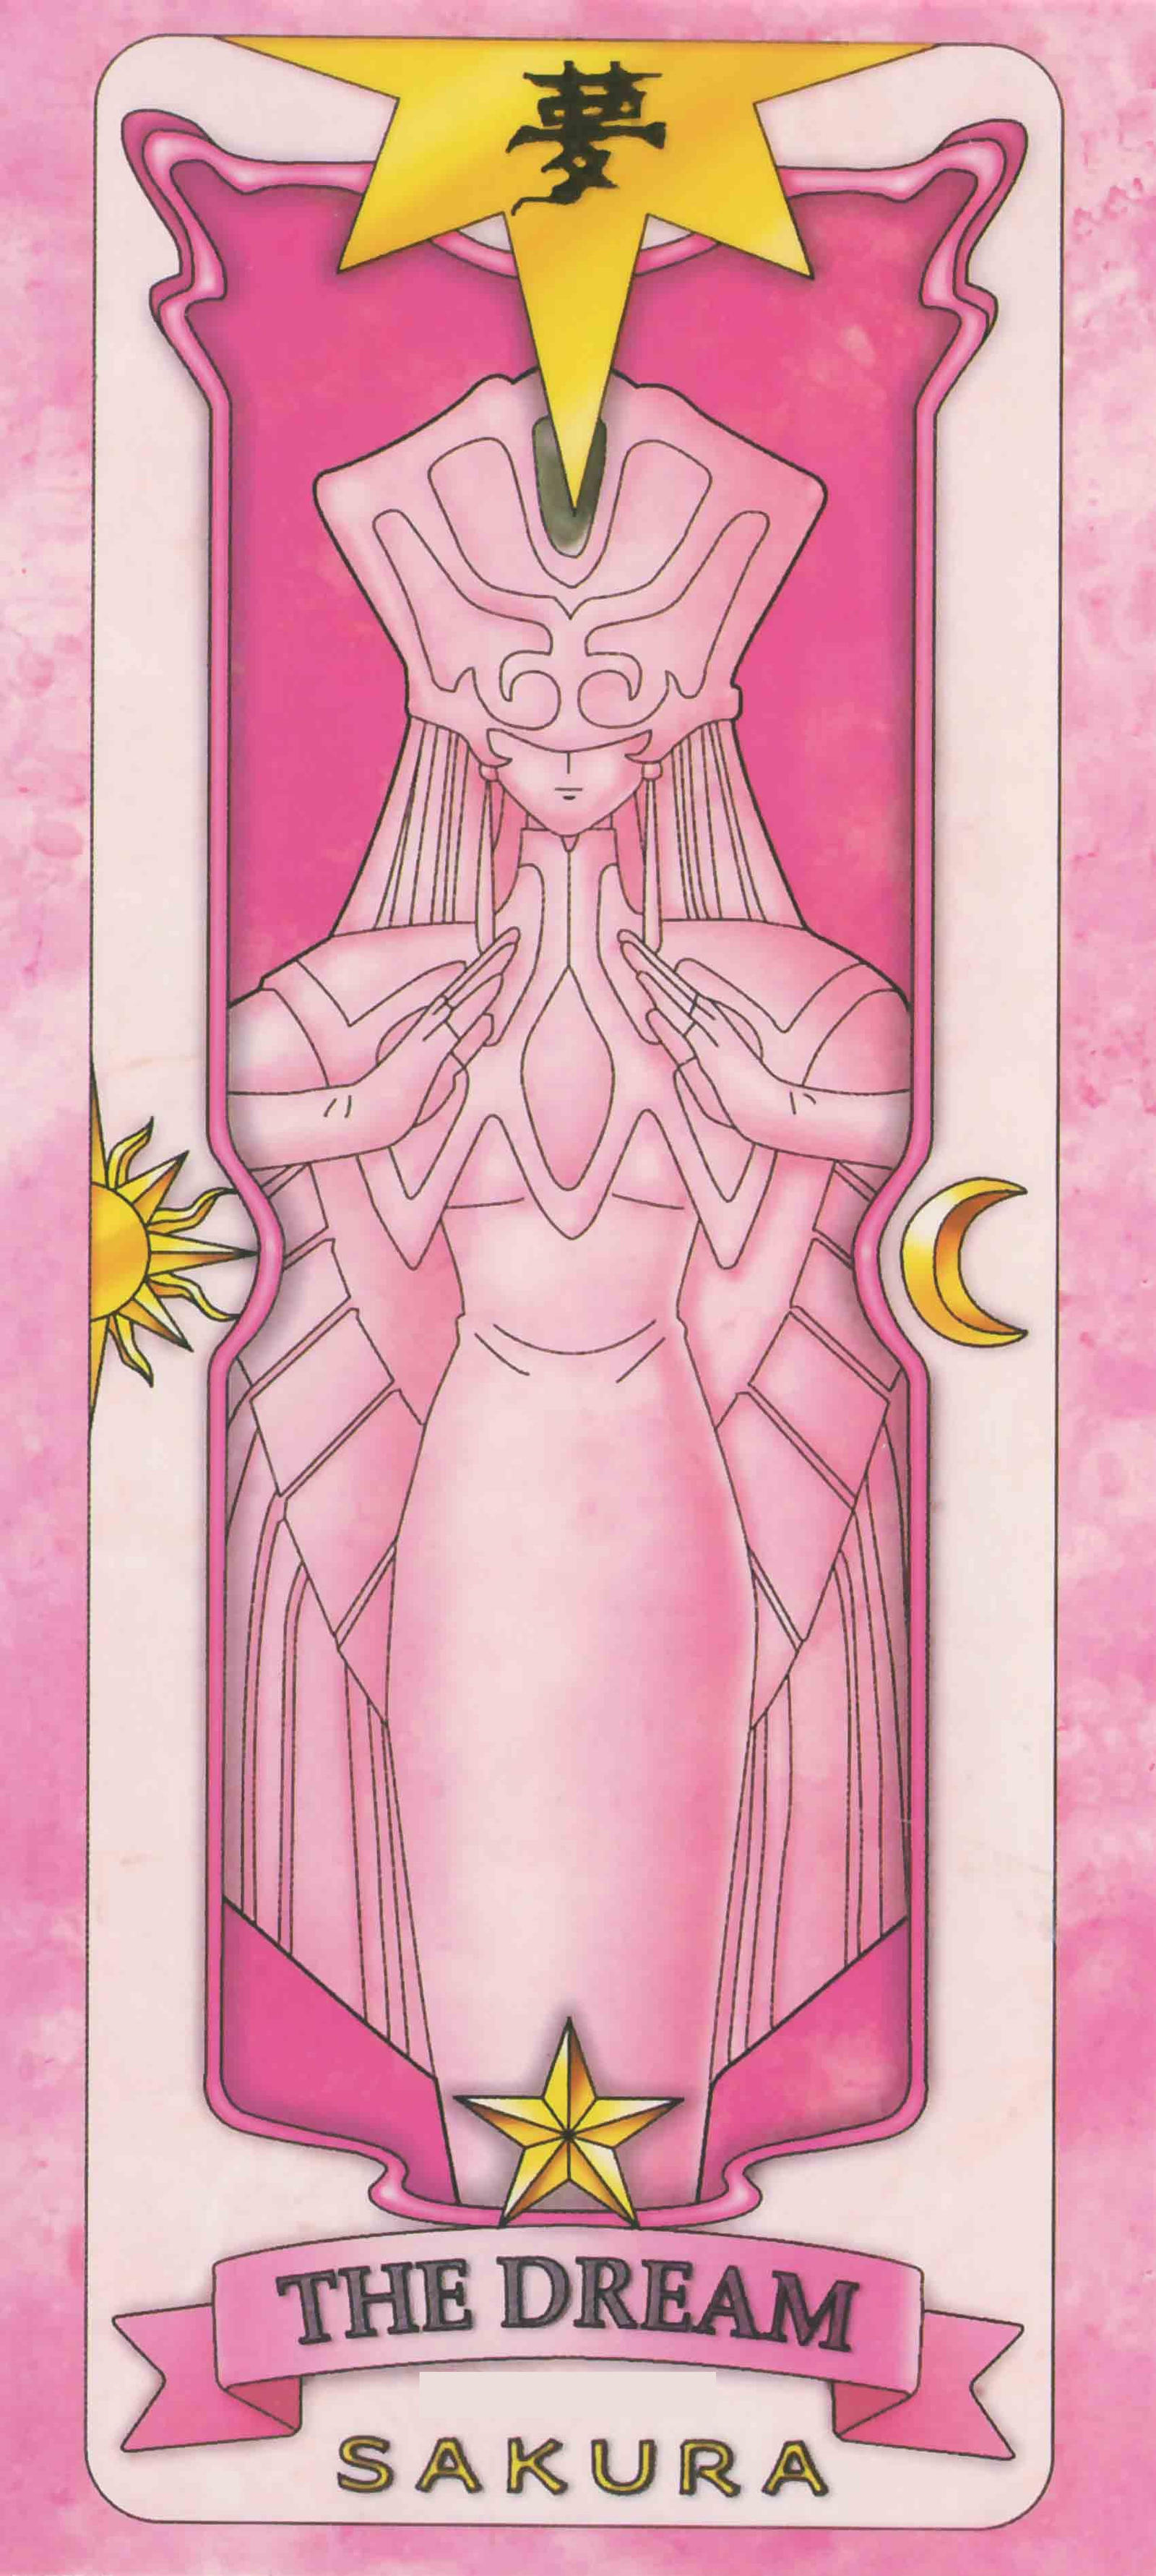 Cardcaptor Sakura: Clear Card Season 2 Poster by Joshuat1306 on DeviantArt